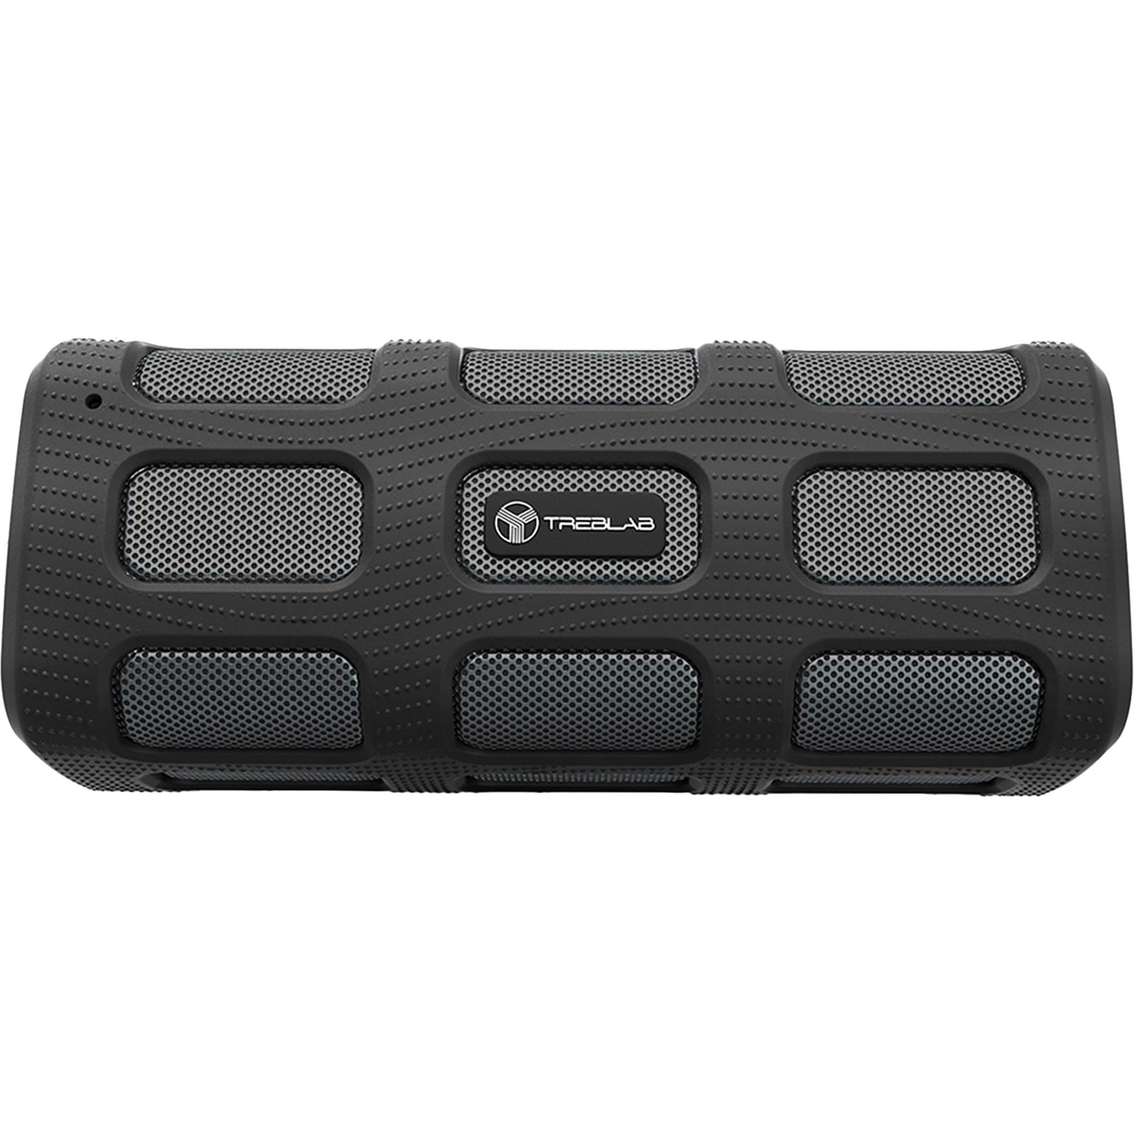 Treblab FX100 Portable Rugged Bluetooth Outdoor Speaker - Image 2 of 5